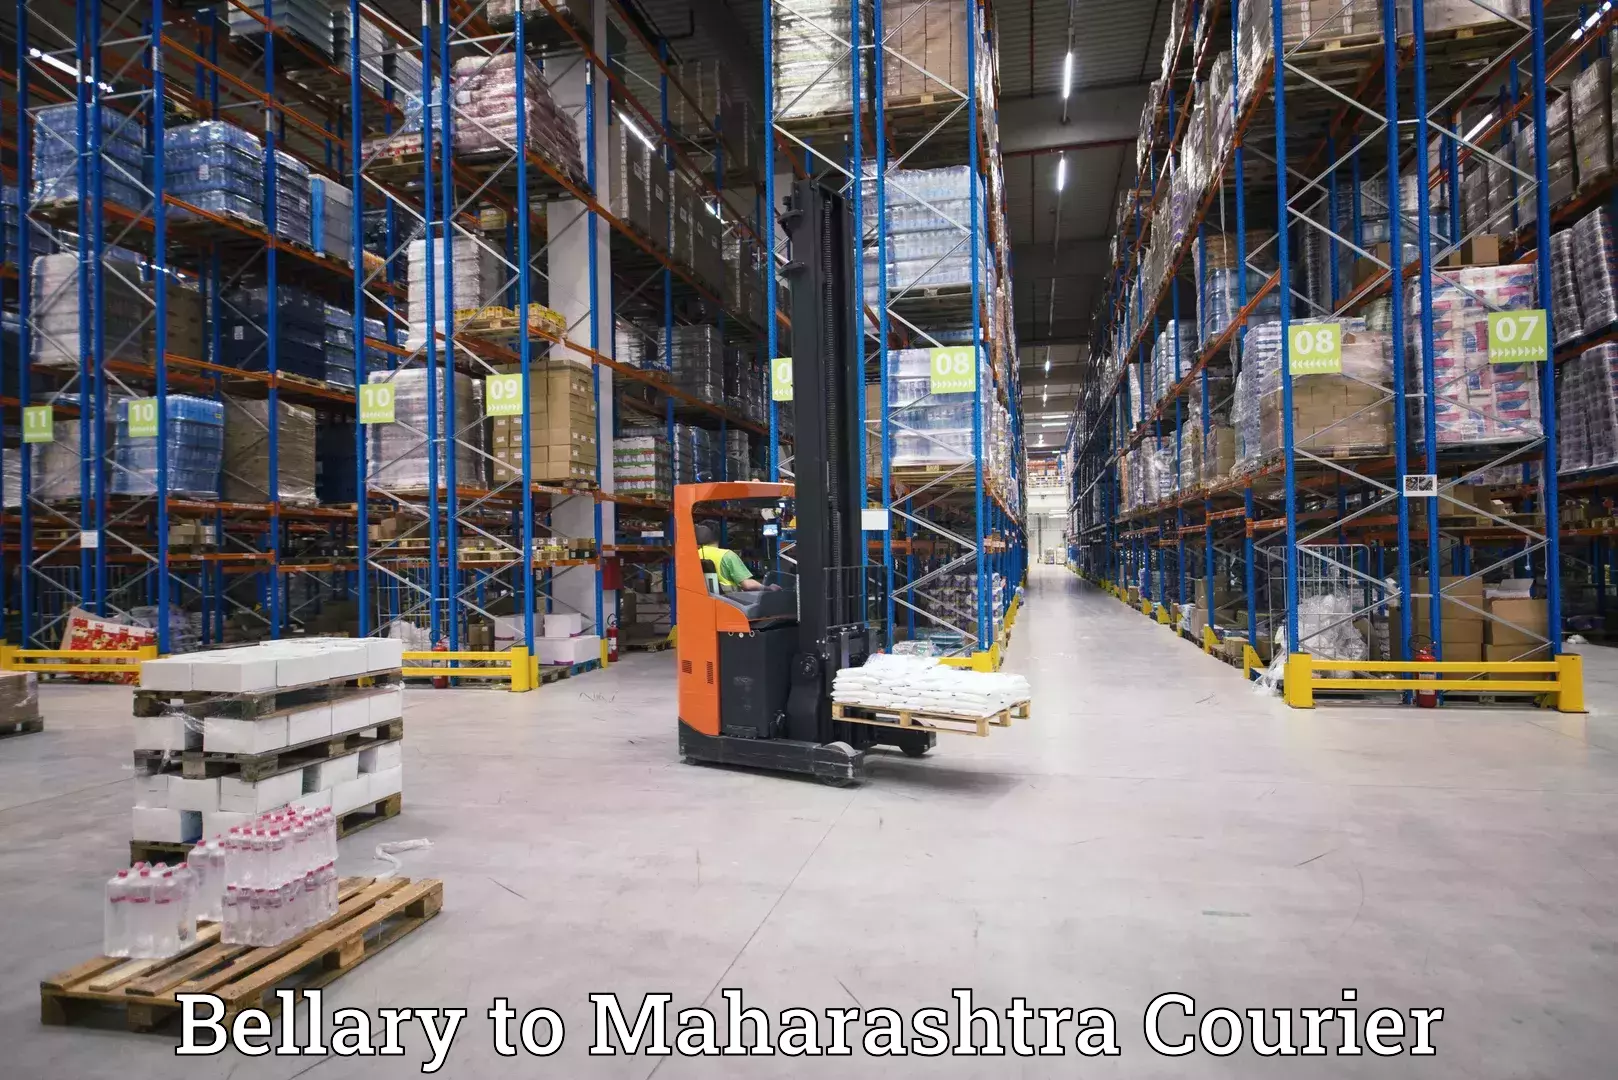 Express logistics providers Bellary to Nandurbar